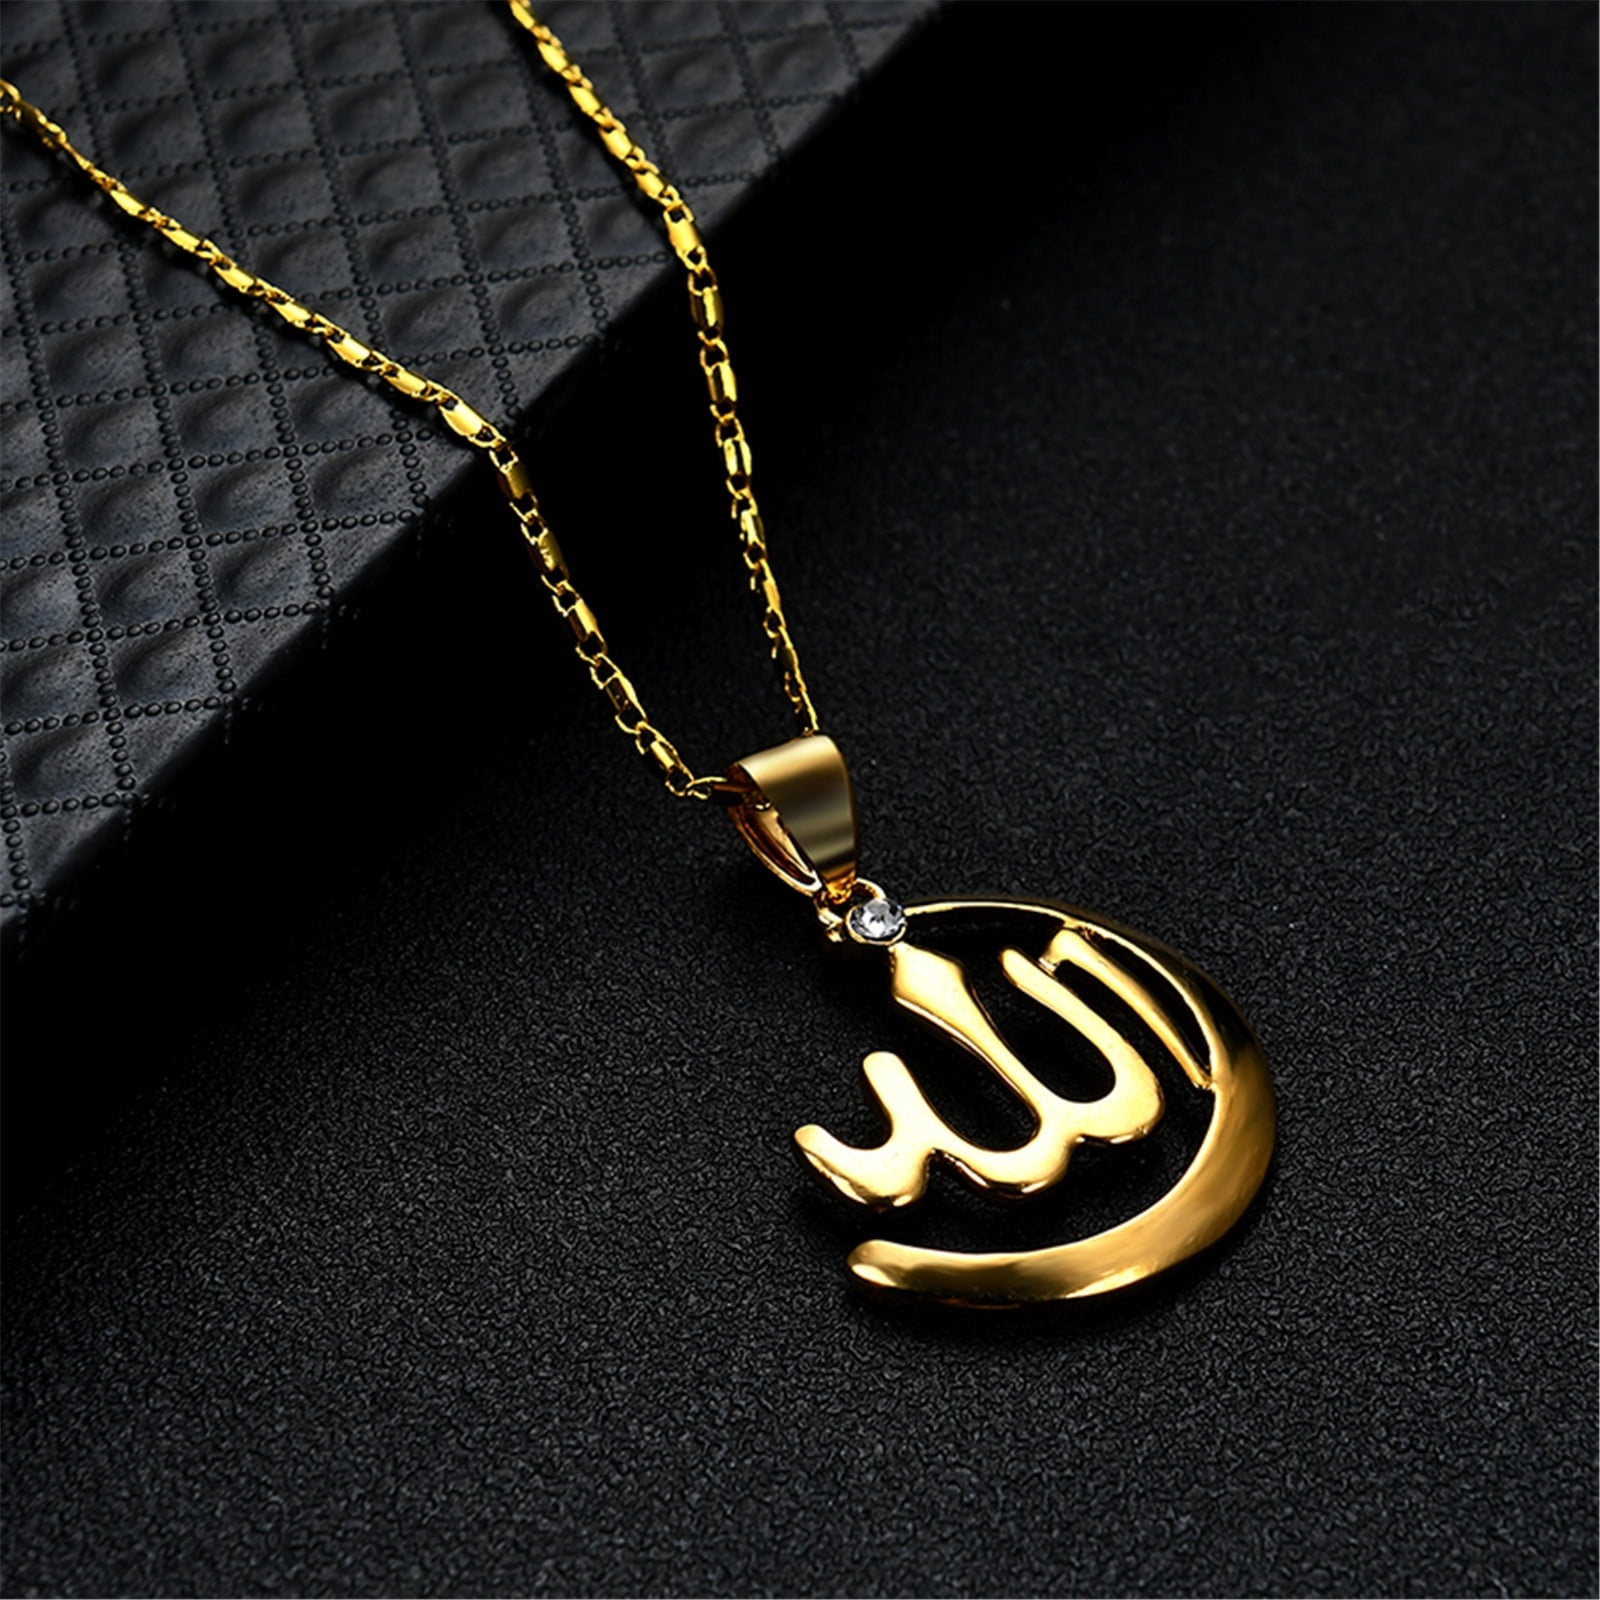 Men Women Muslim Allah Pendant Golden Tone Chain Necklace Jewelry Gift Utility